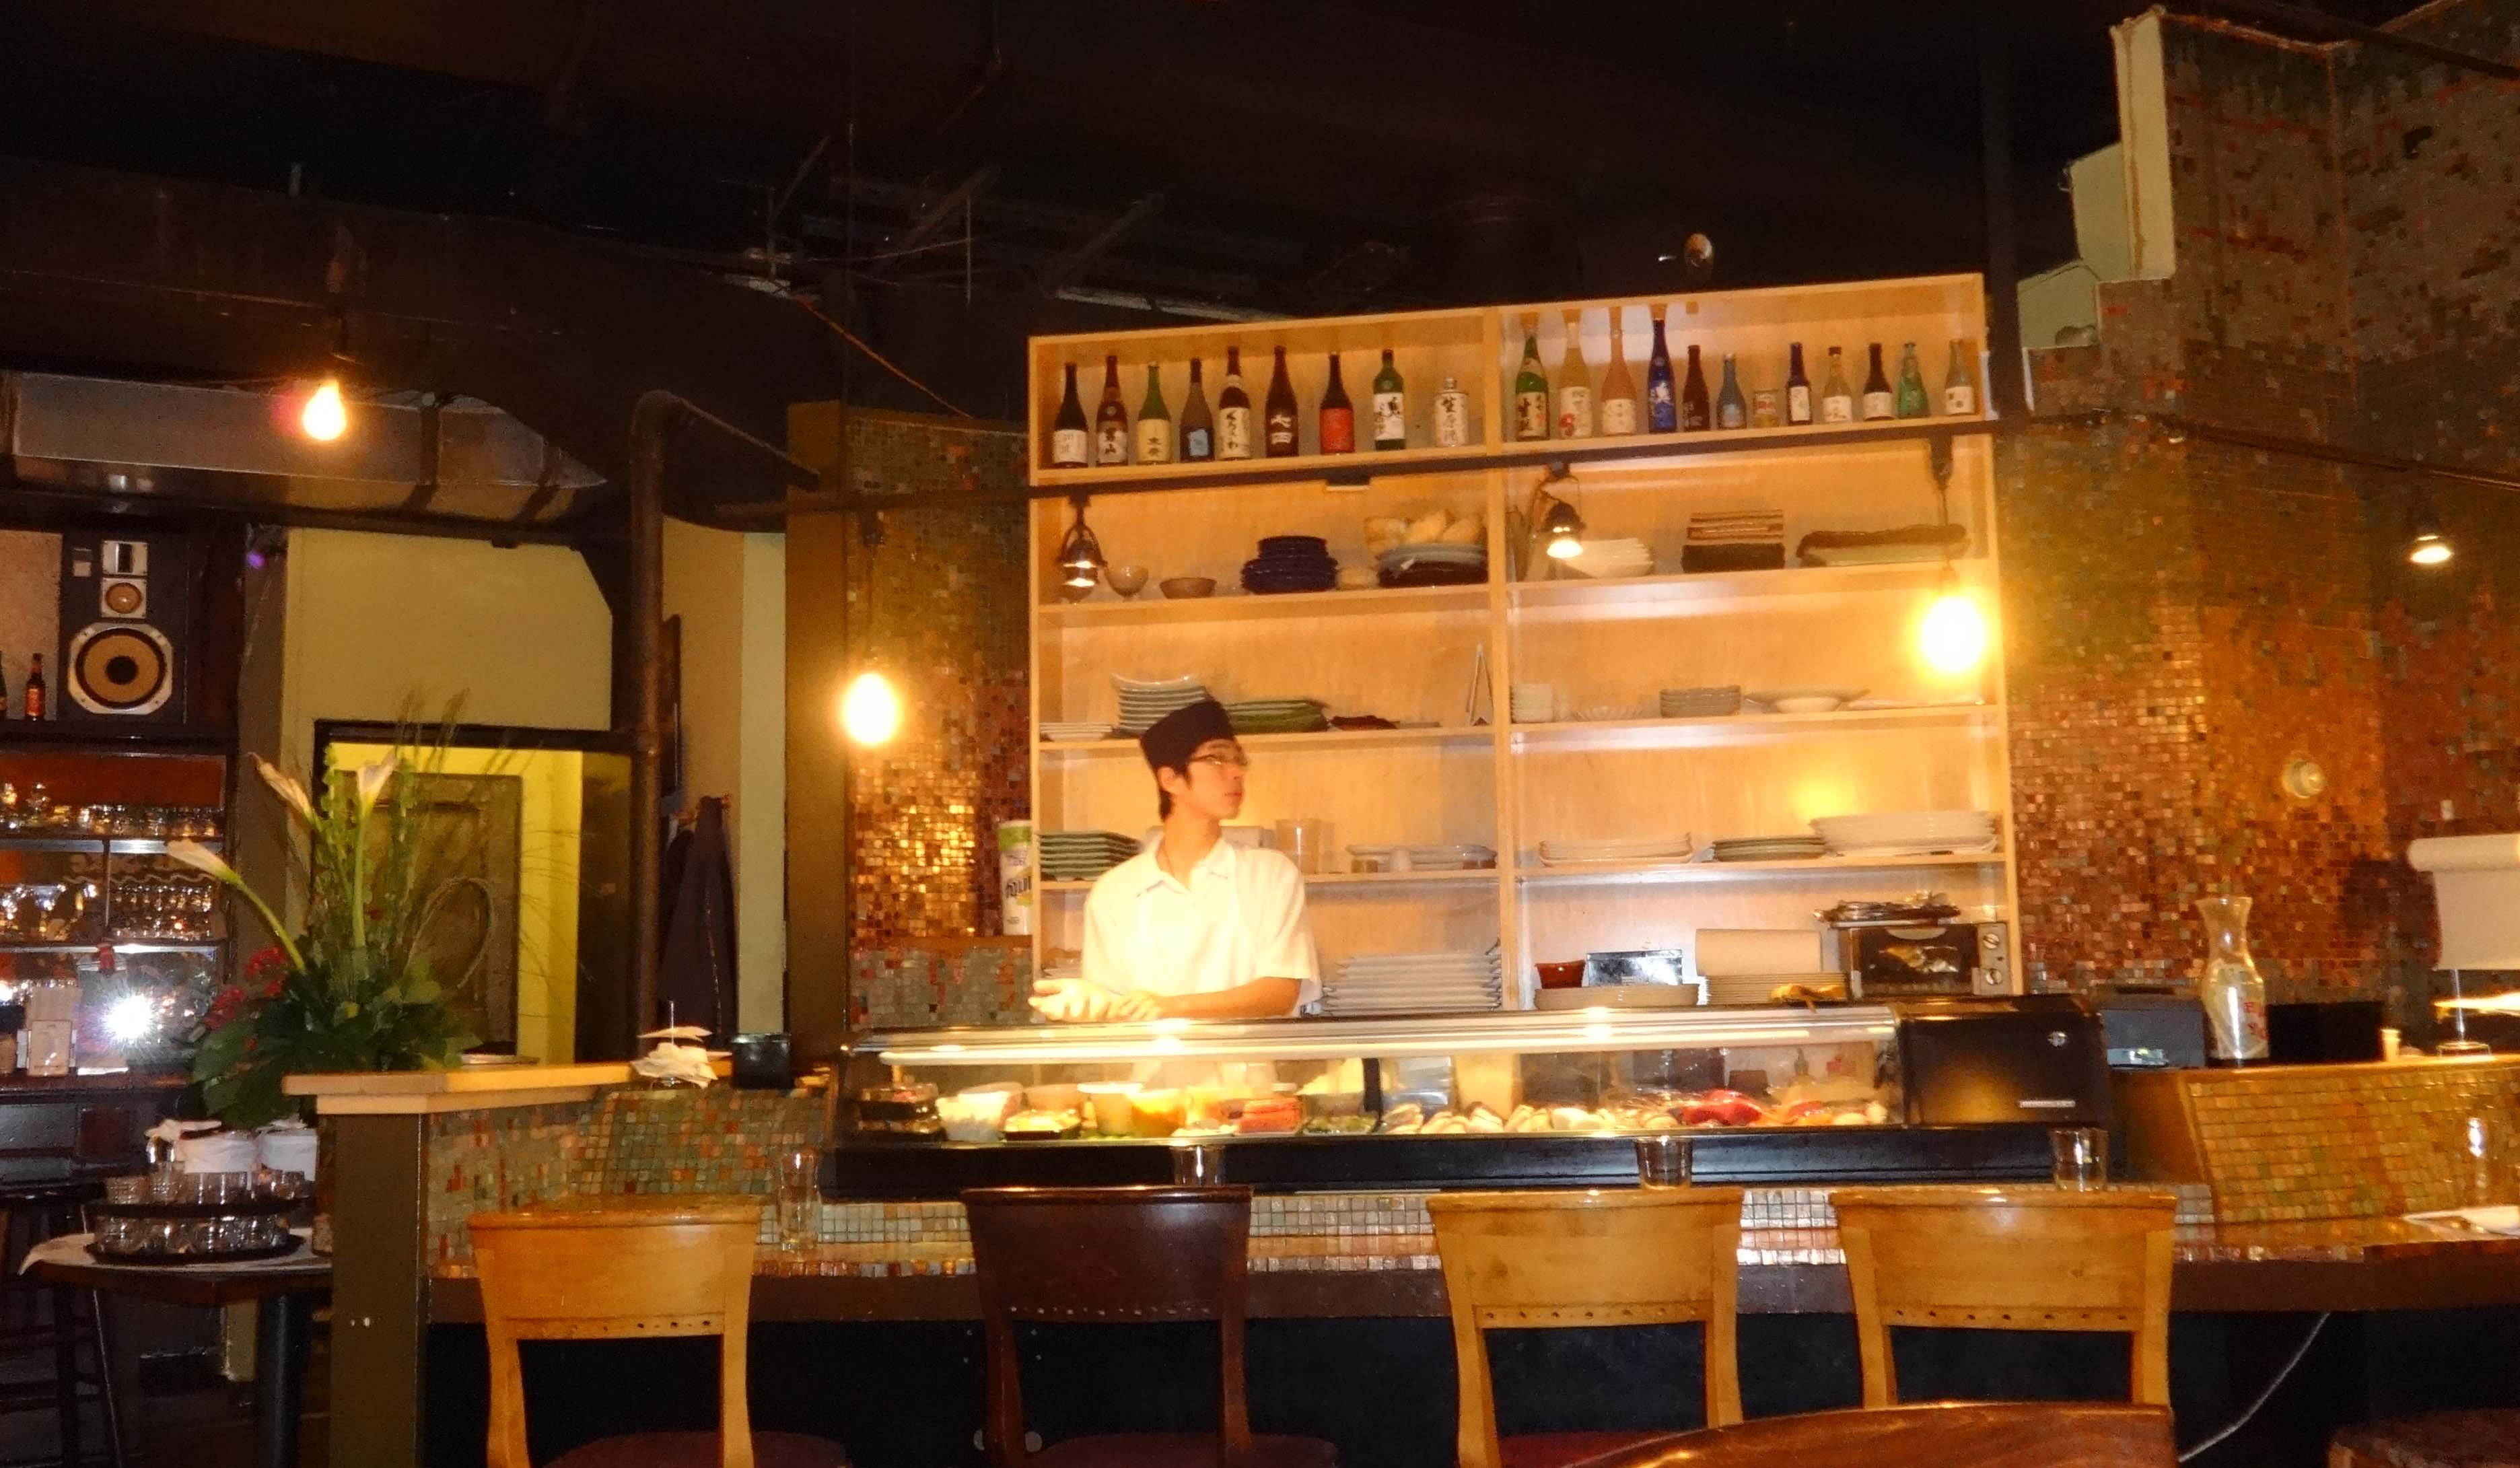 Zutto sushi bar